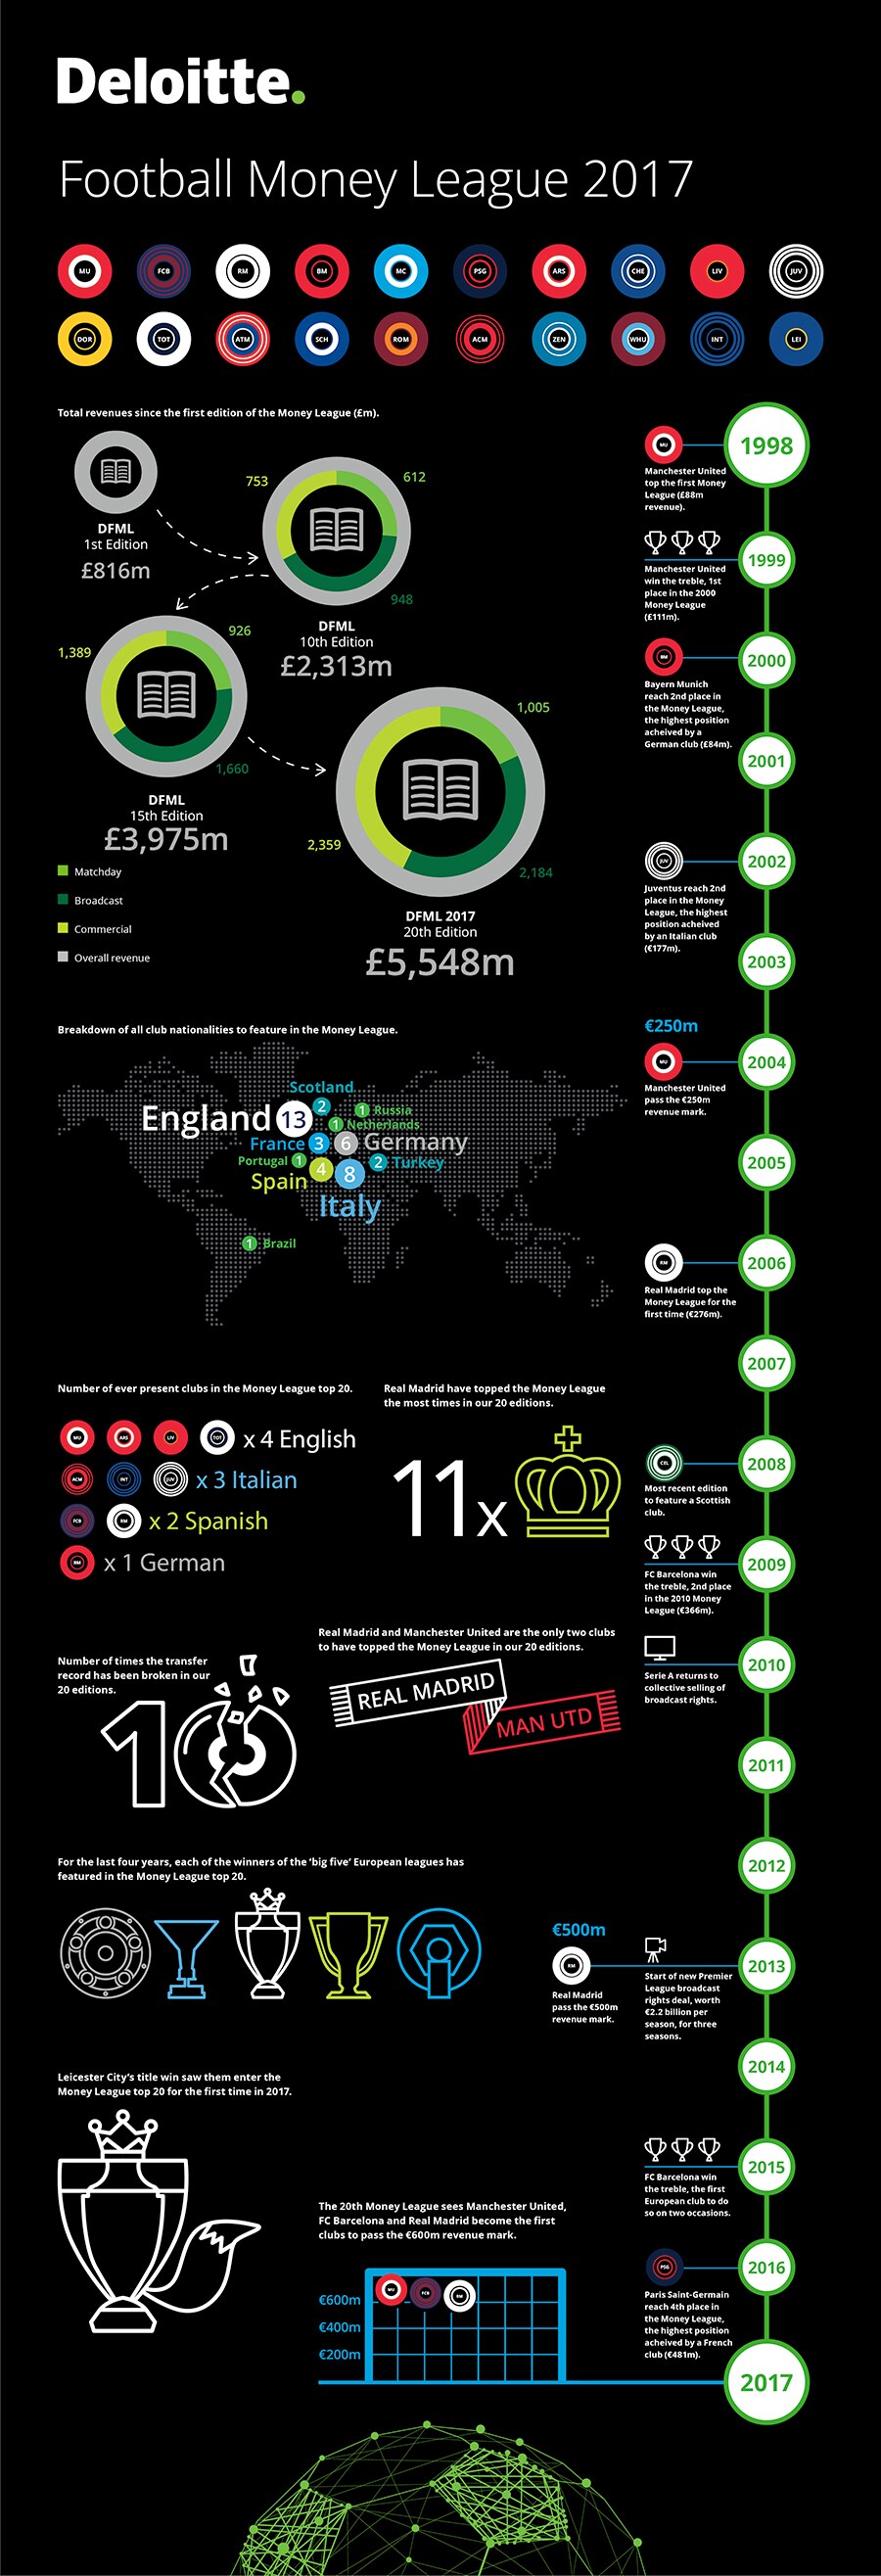 deloitte-uk-sport-football-money-league-2017-infographic.jpg